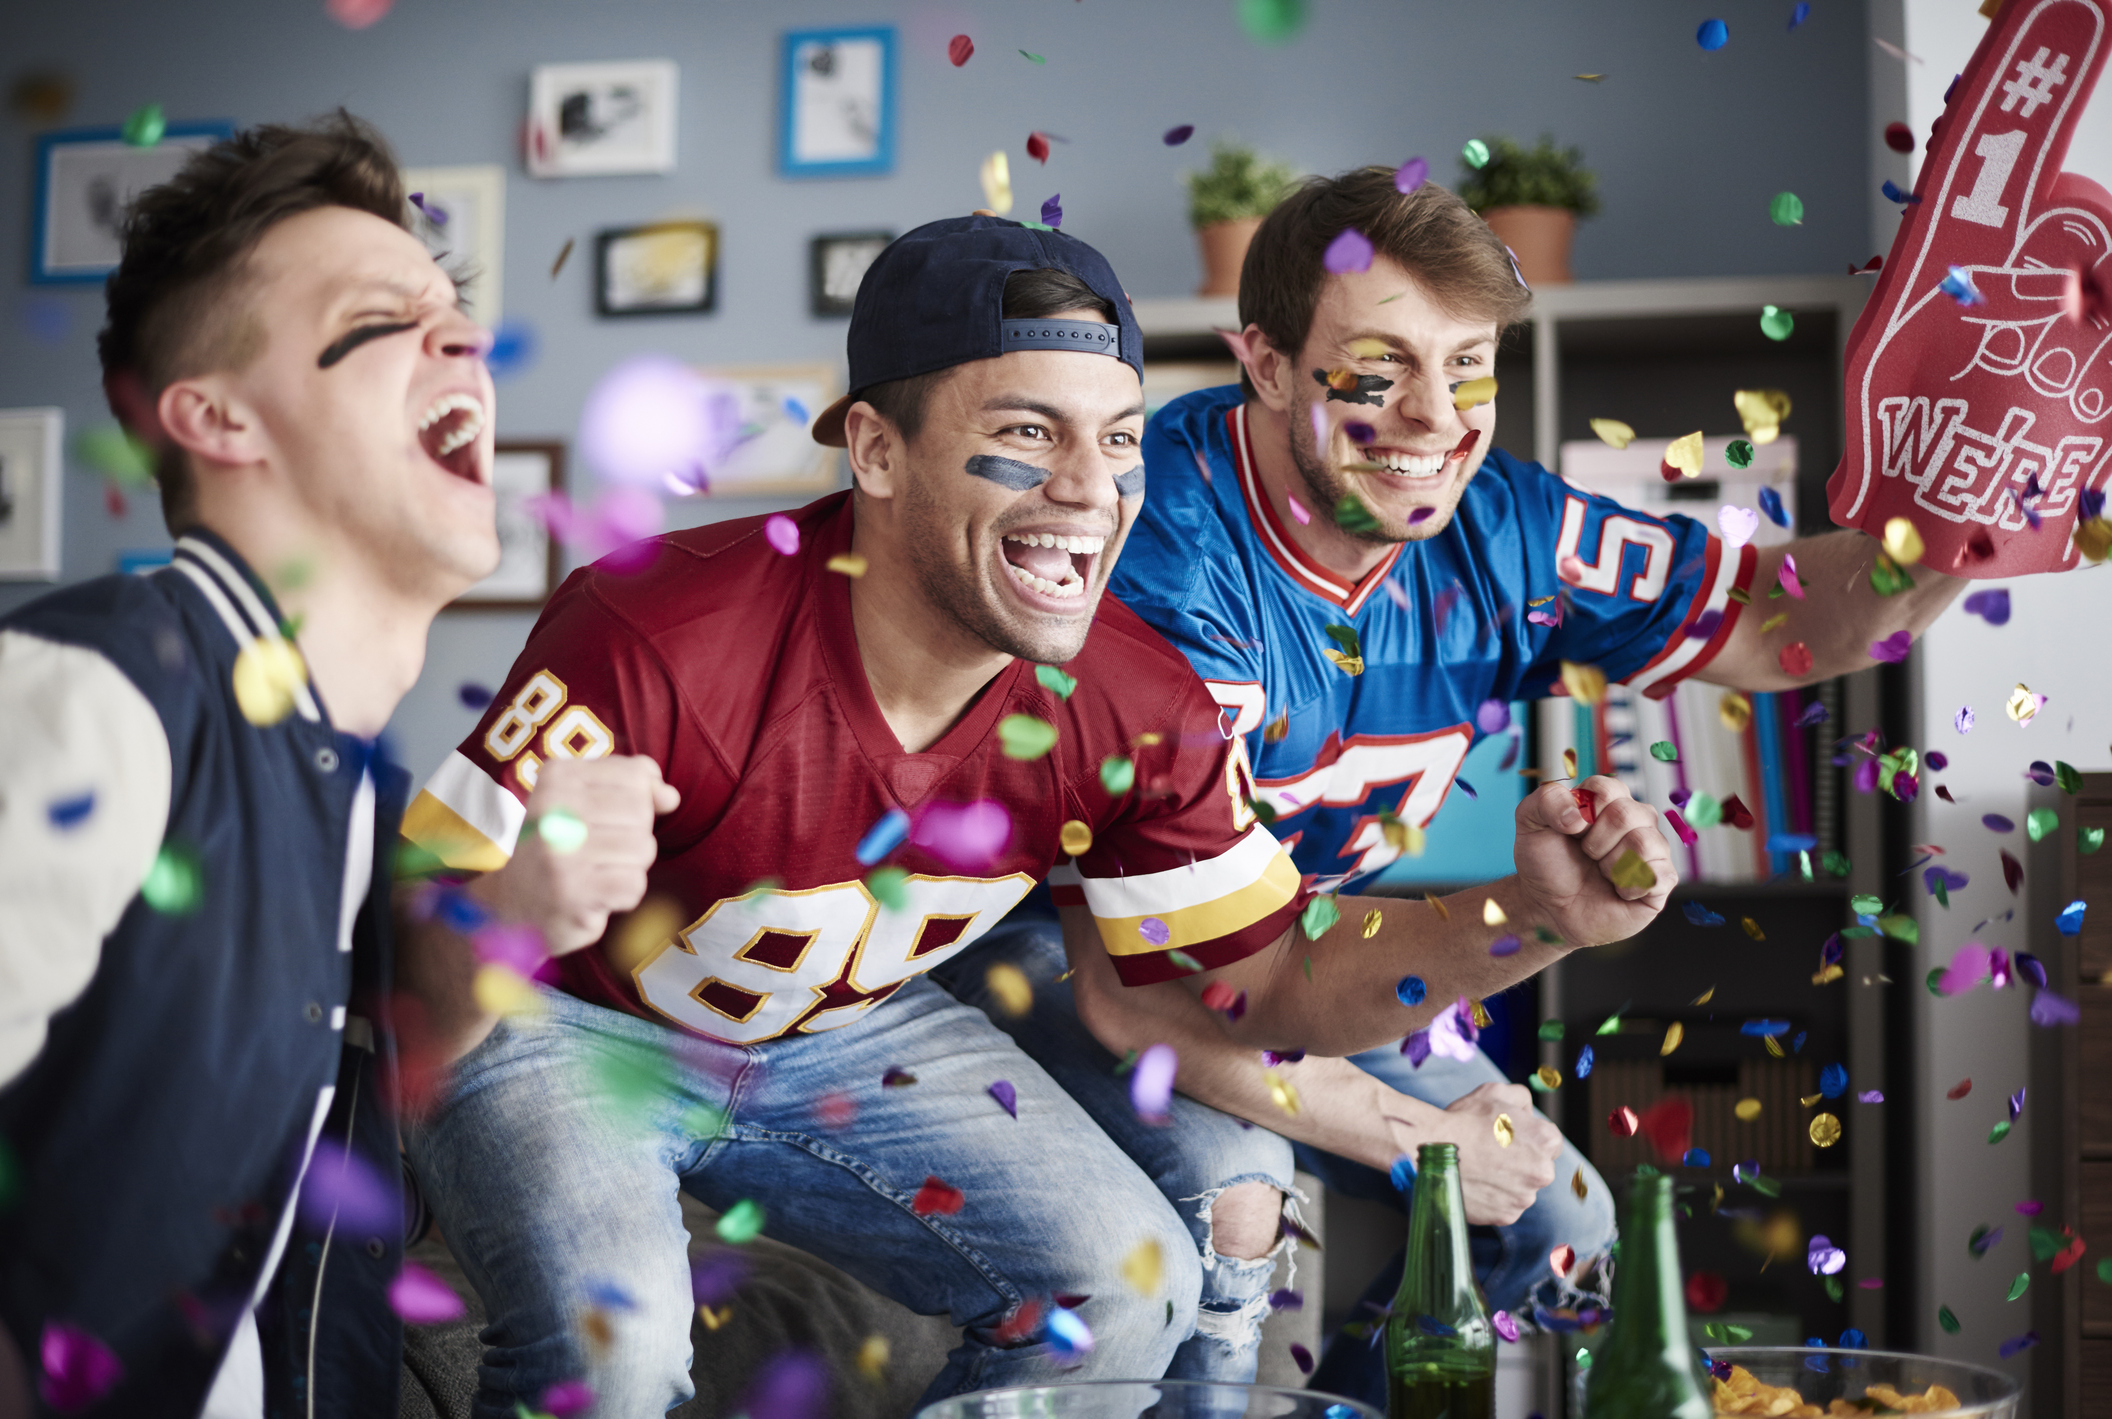 American football fans among falling confetti